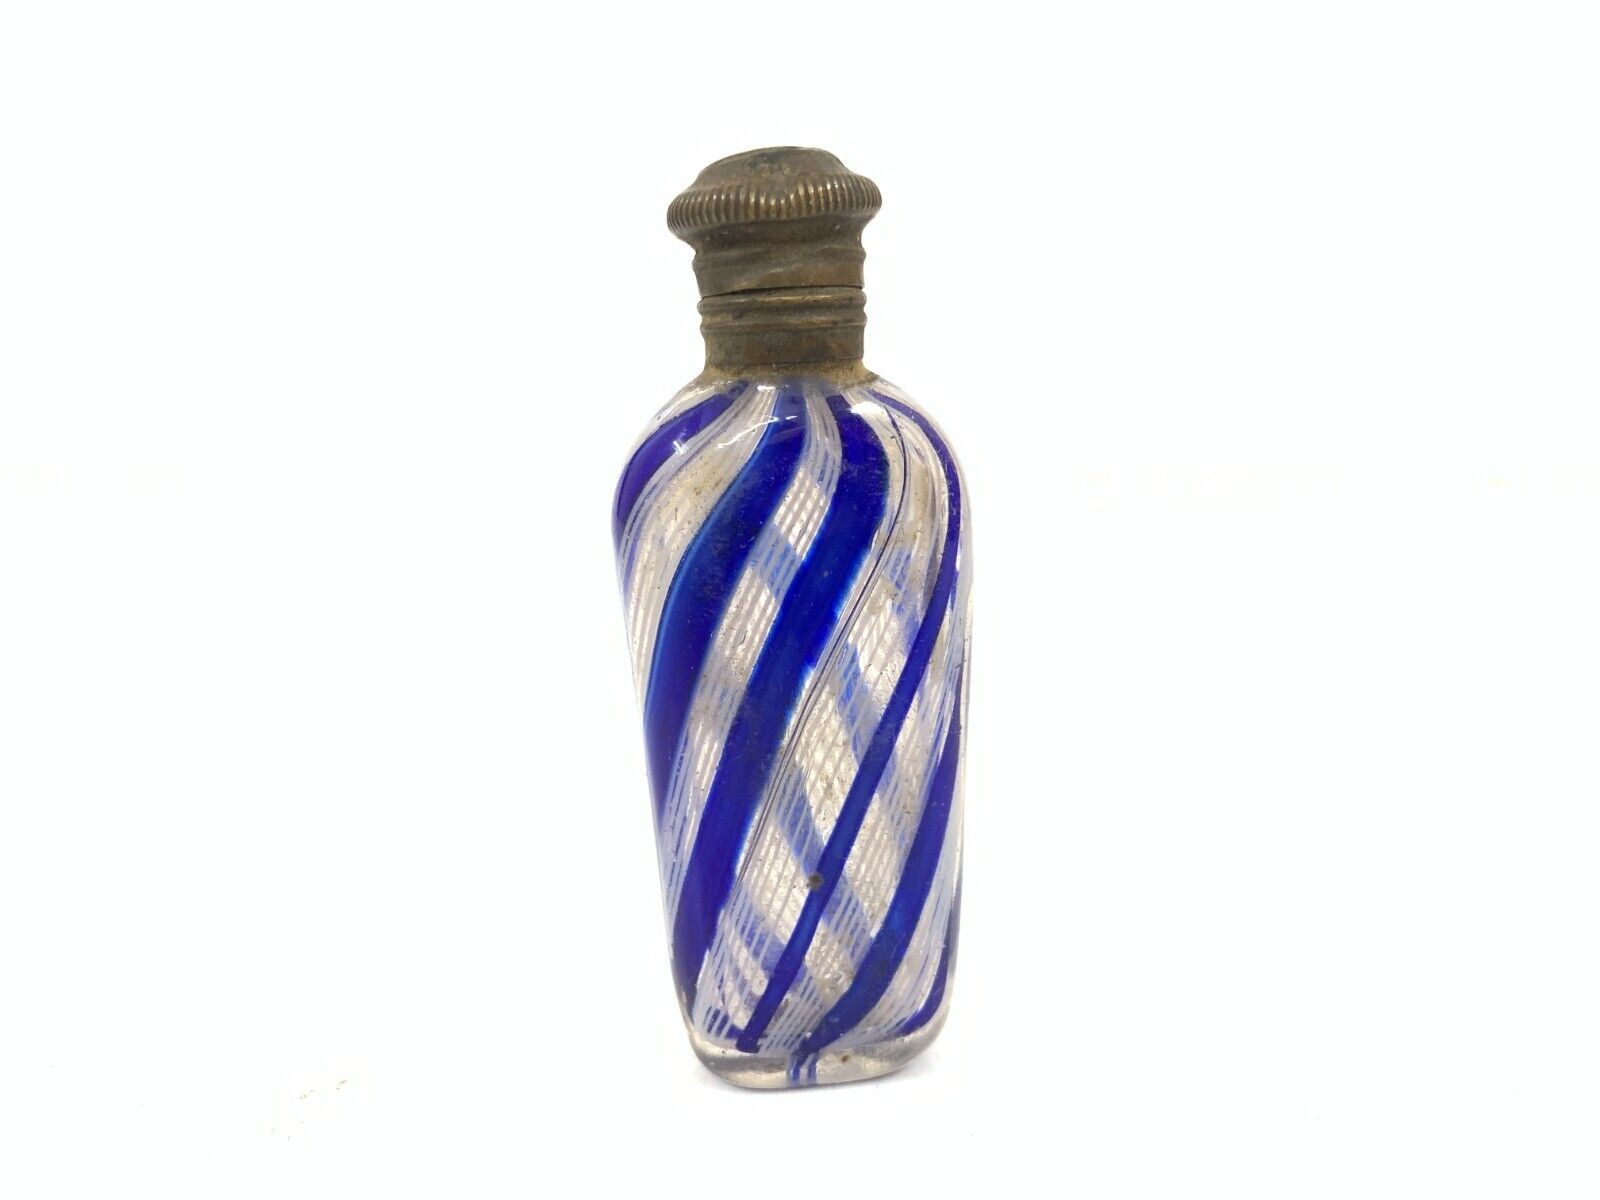 Antique Latticino art perfume bottle